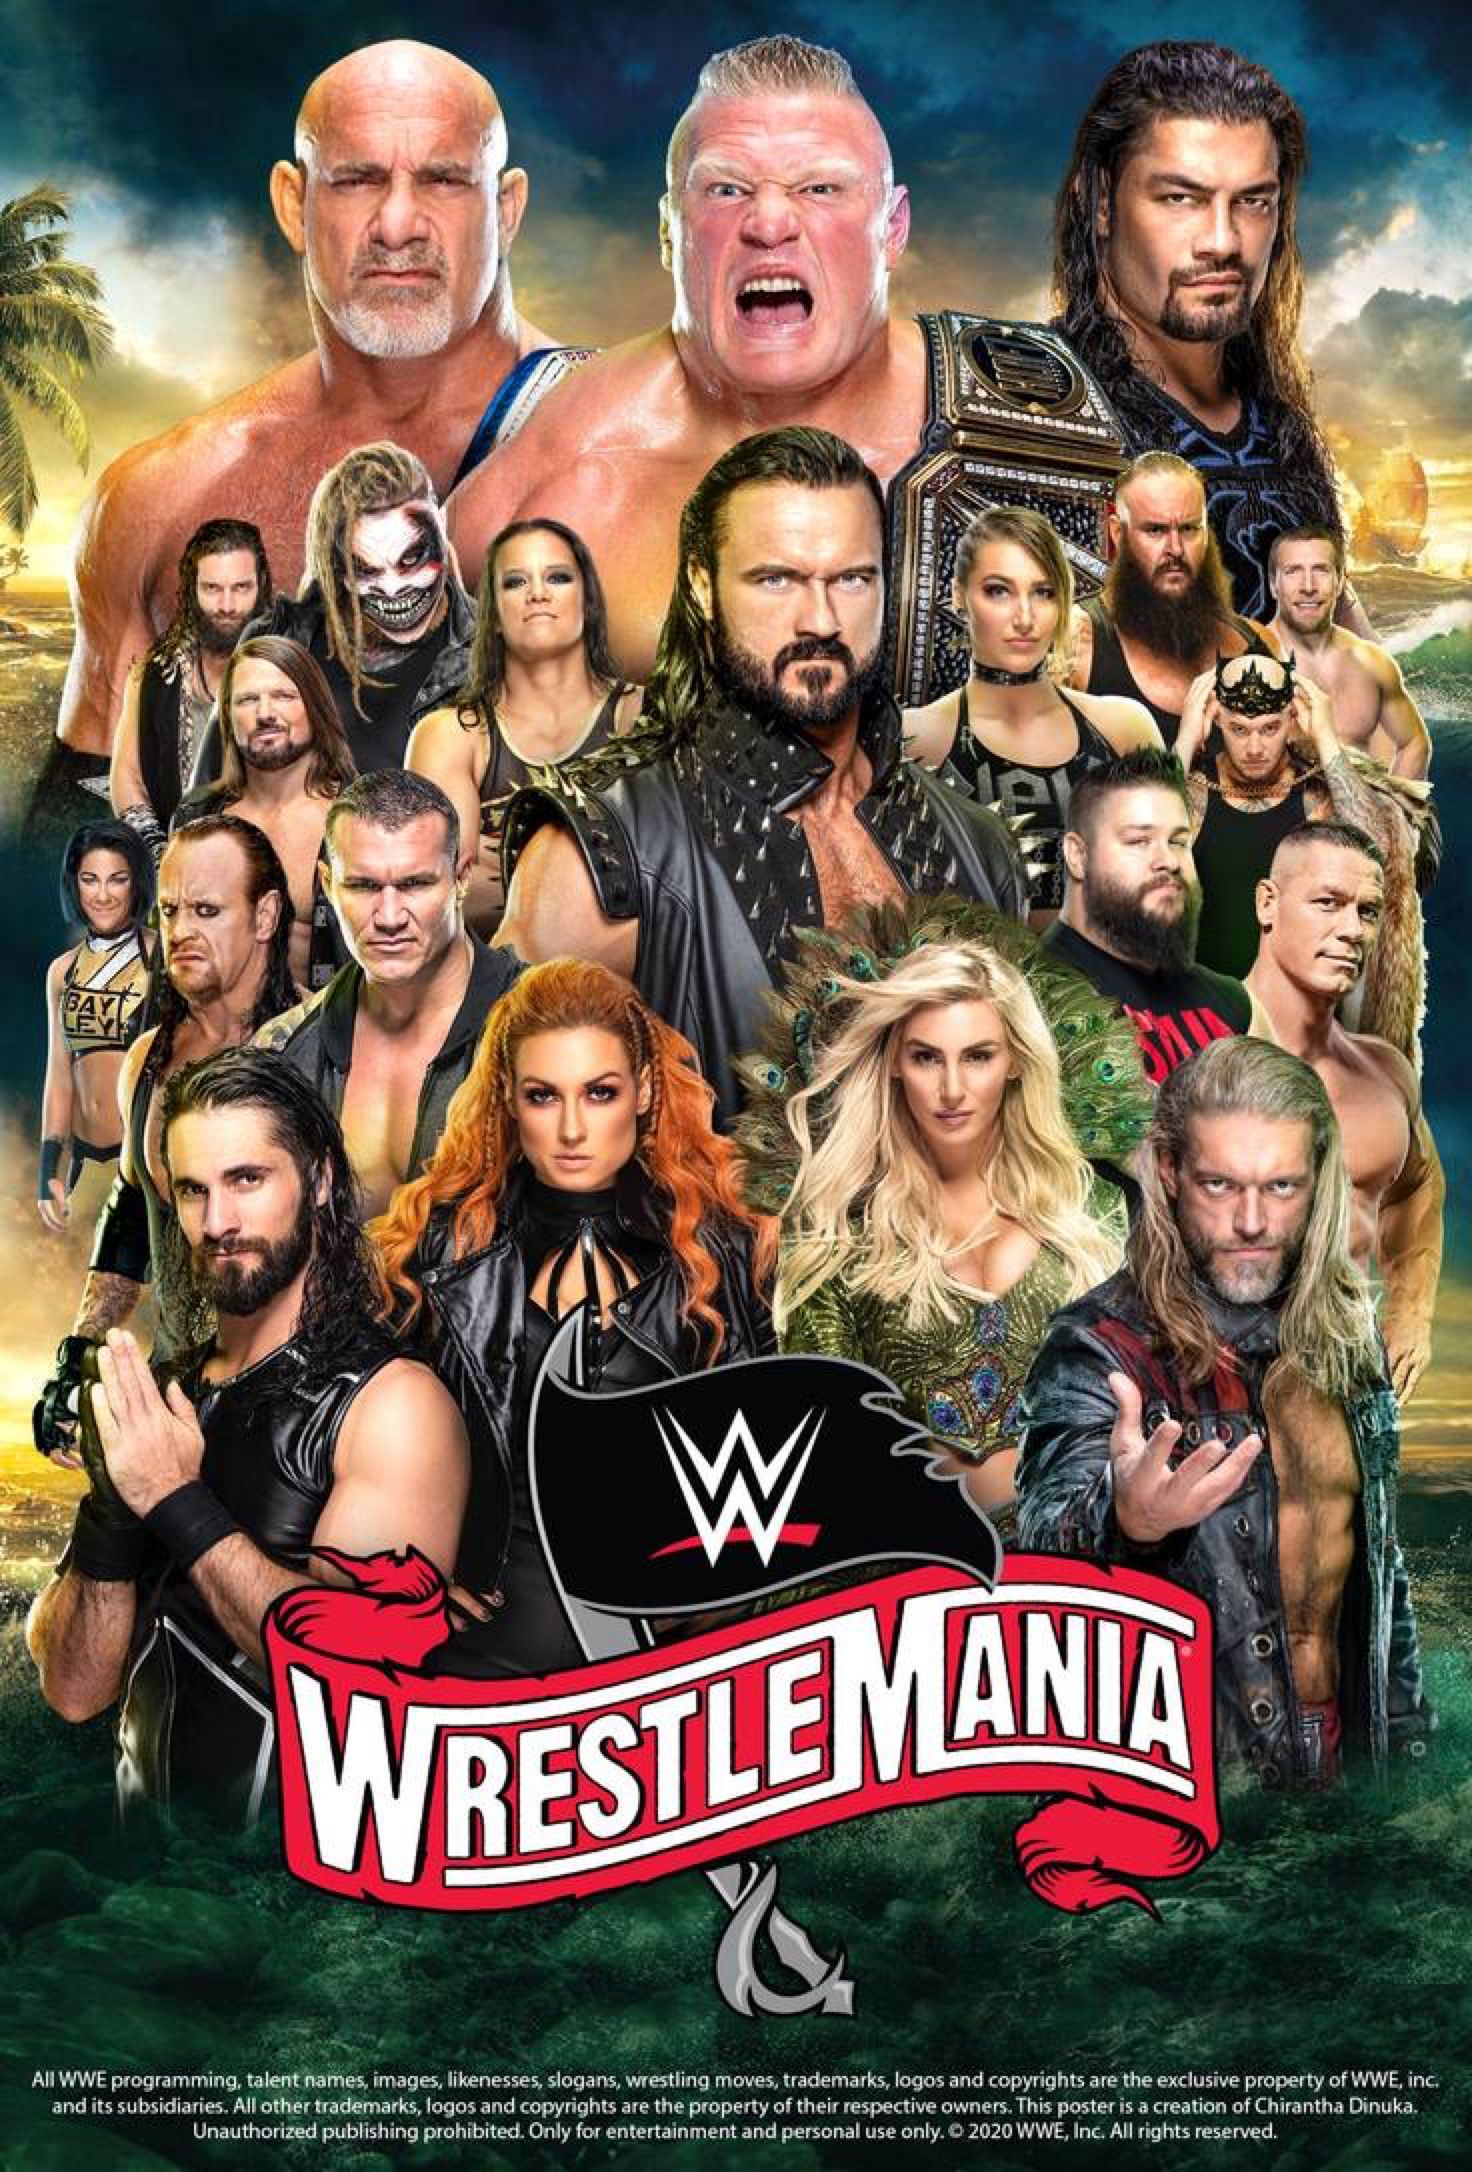 WWE WrestleMania 36 Poster. Wwe picture, Wwe ppv, Wrestling wwe